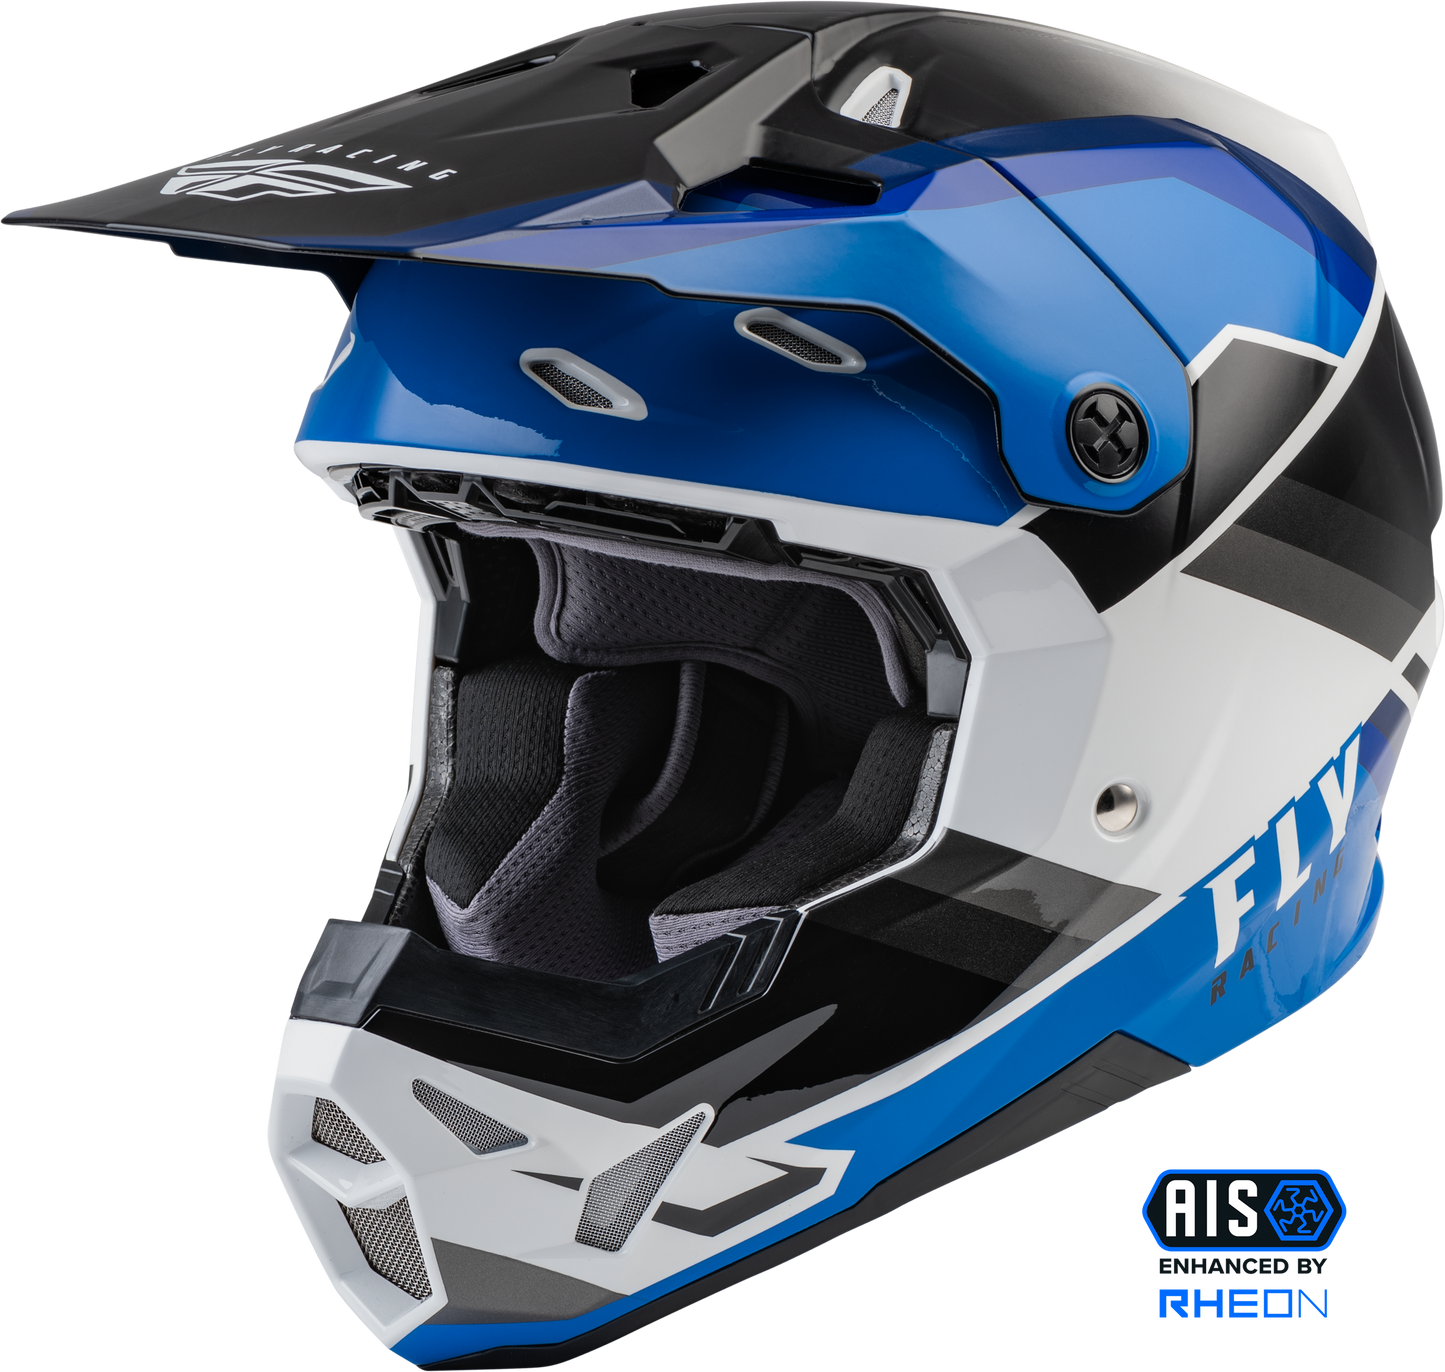 Fly Racing 73-0020 Formula Cp Rush Helmet Black/Blue/White